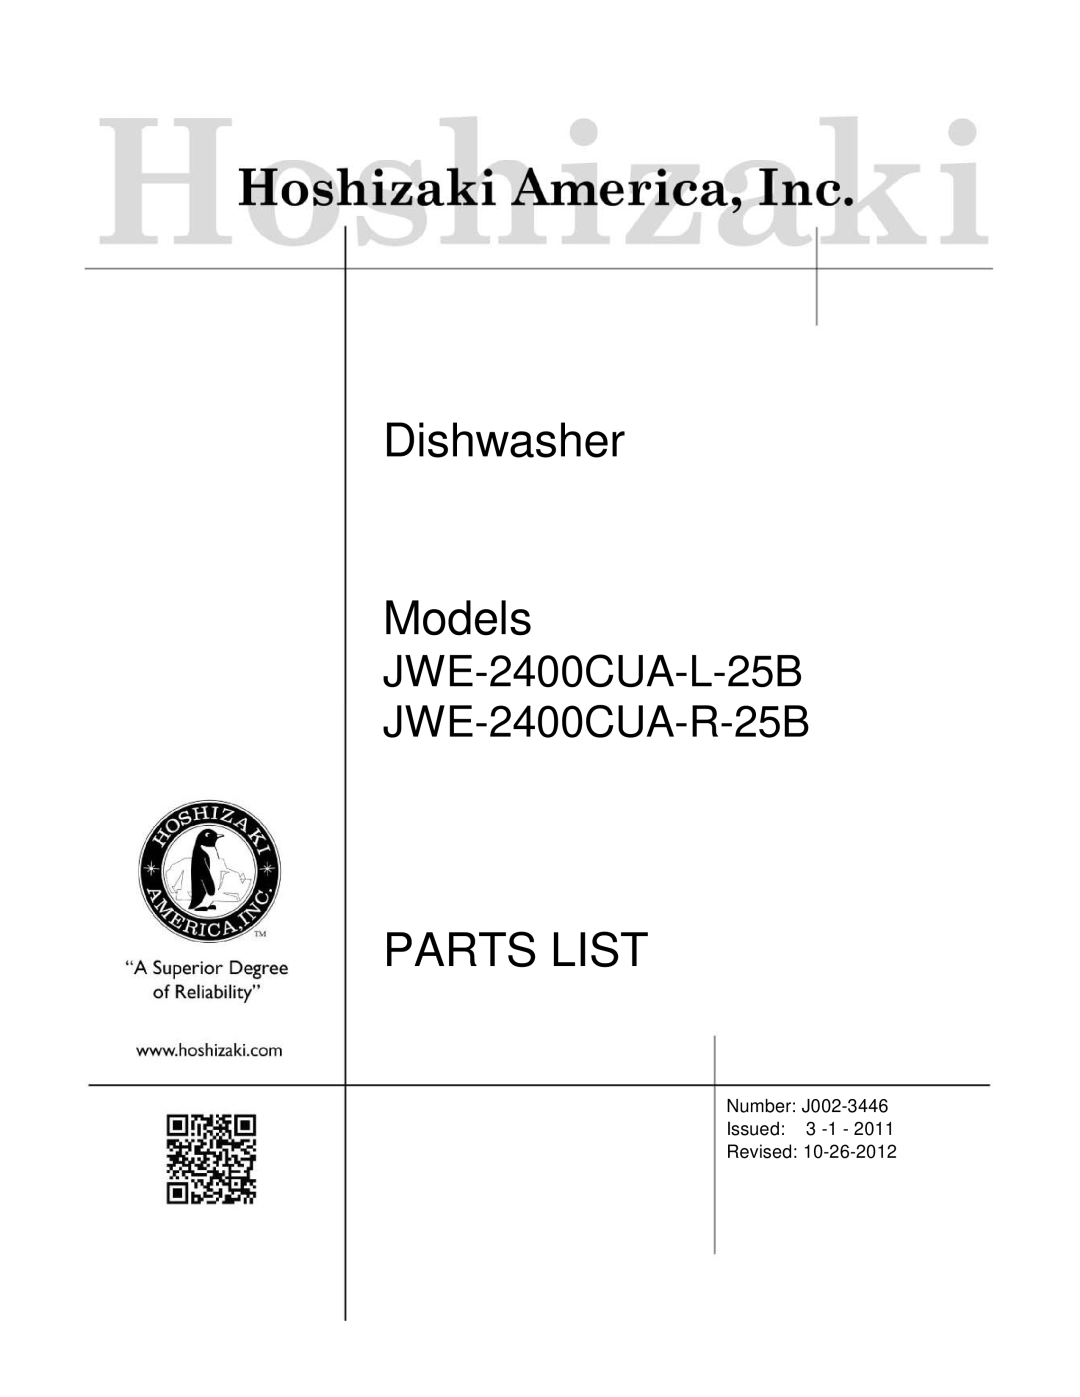 Hoshizaki manual Dishwasher Models, Parts List, JWE-2400CUA-L-25B JWE-2400CUA-R-25B 